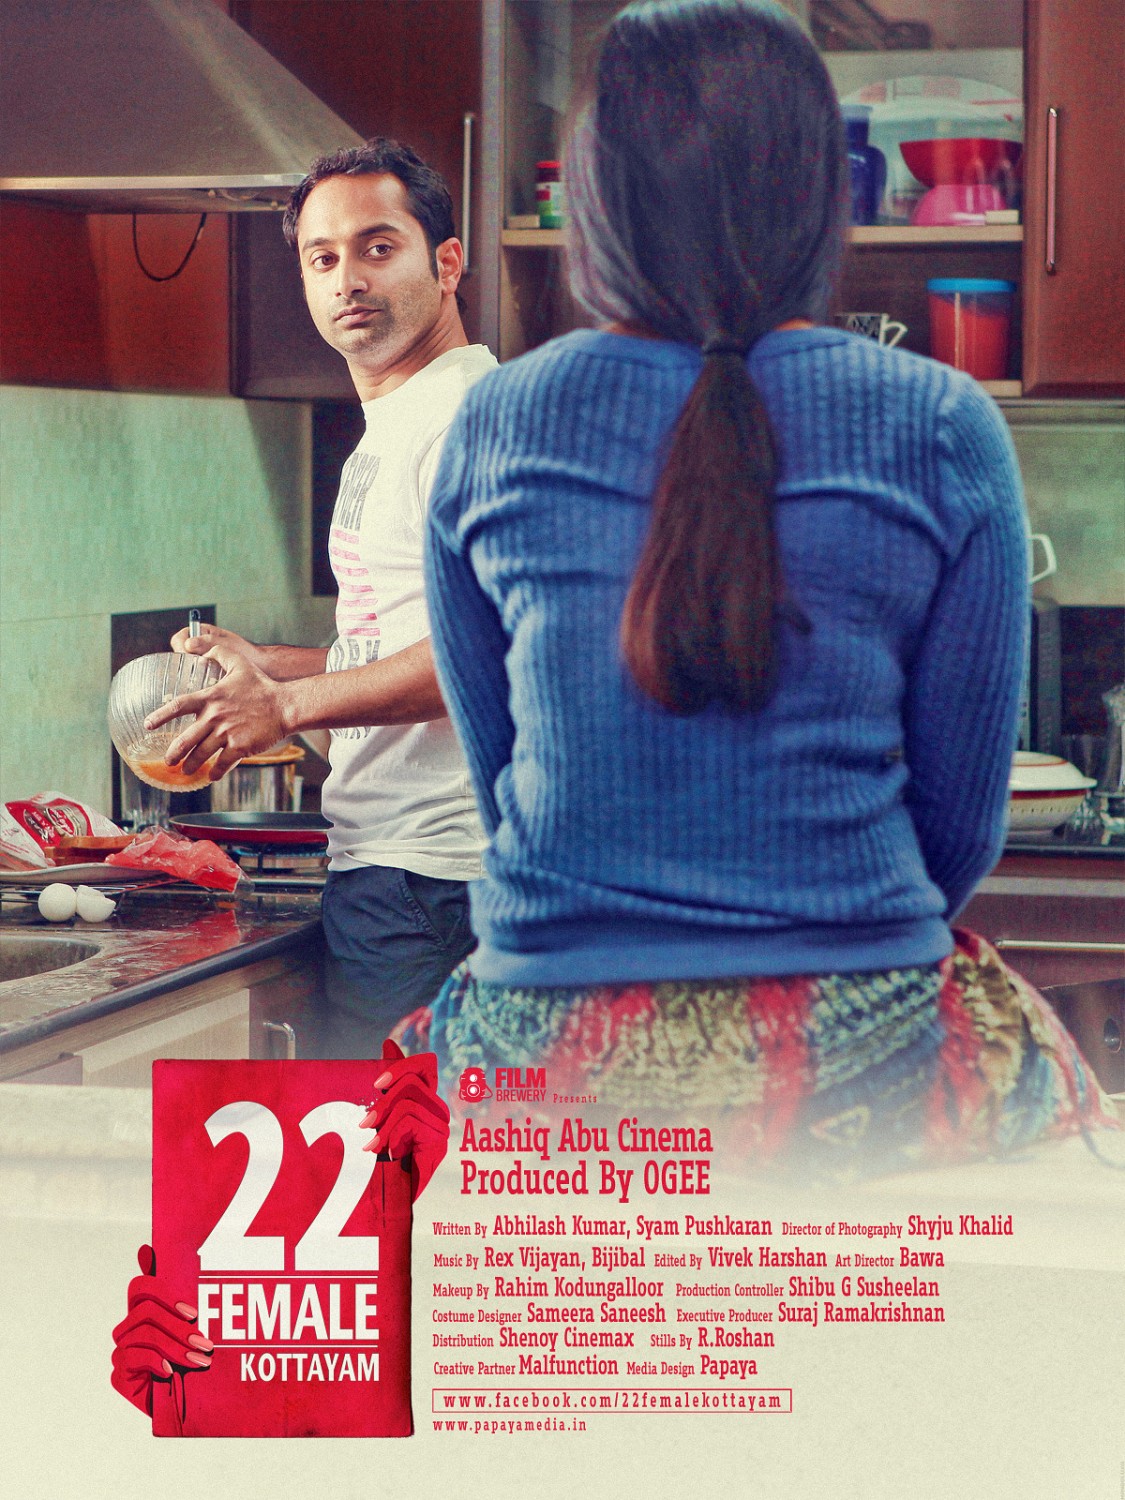 Extra Large Movie Poster Image for 22 Female Kottayam (#28 of 28)